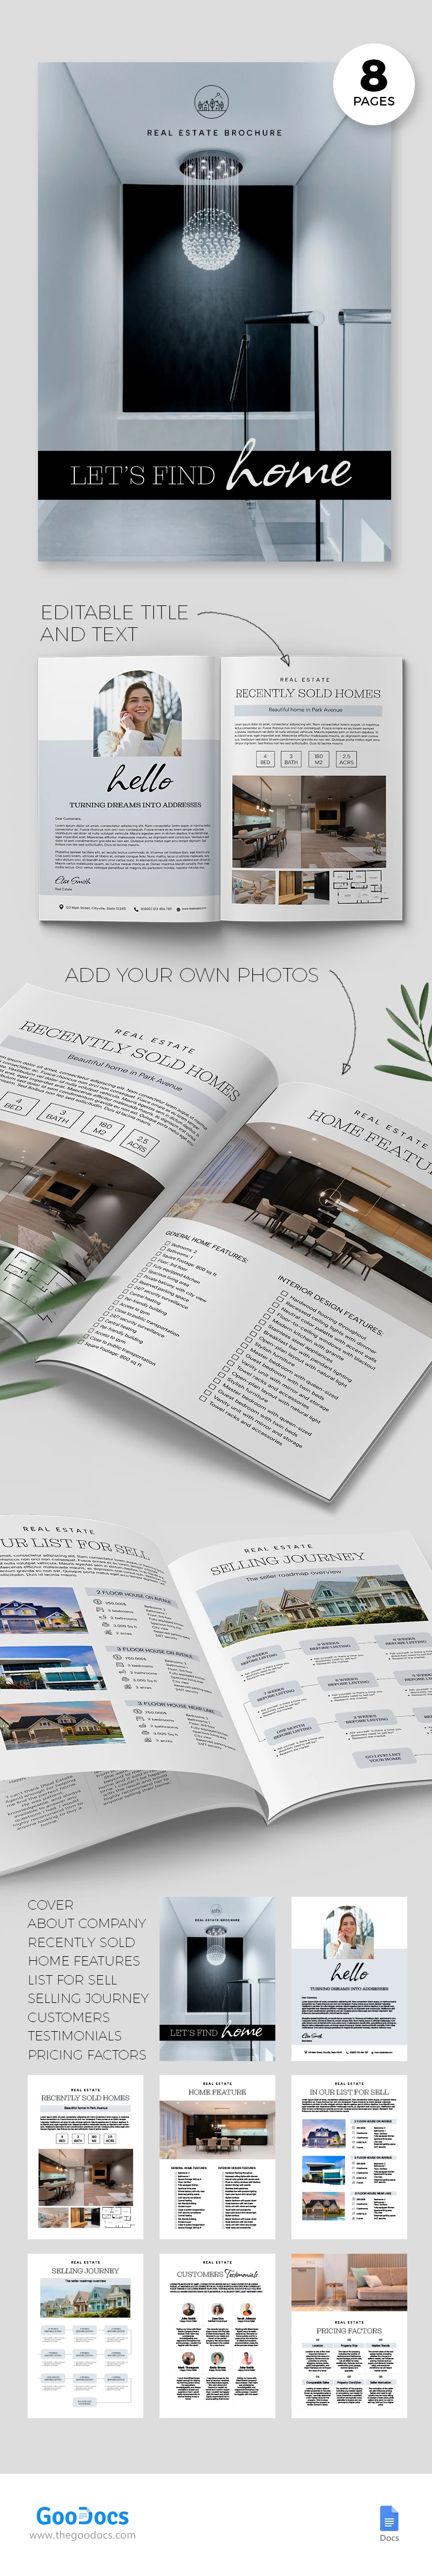 Real Estate Seller Guide Brochure - free Google Docs Template - 10068601